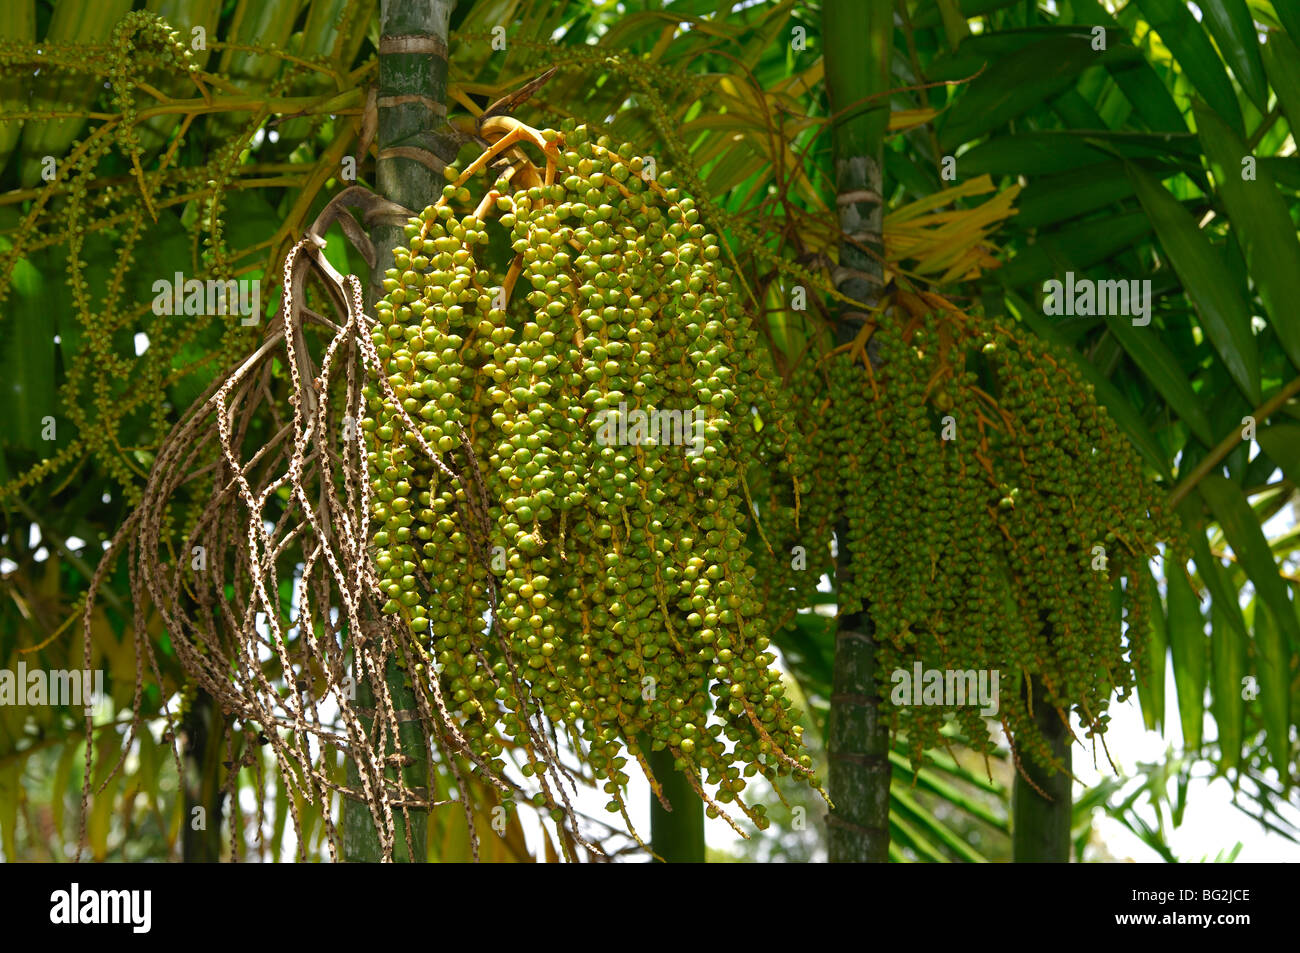 TÌNH YÊU CÂY CỎ ĐV 11   - Page 20 Fruits-of-a-palm-tree-caryota-cumingii-arecaceae-mauritius-BG2JCE